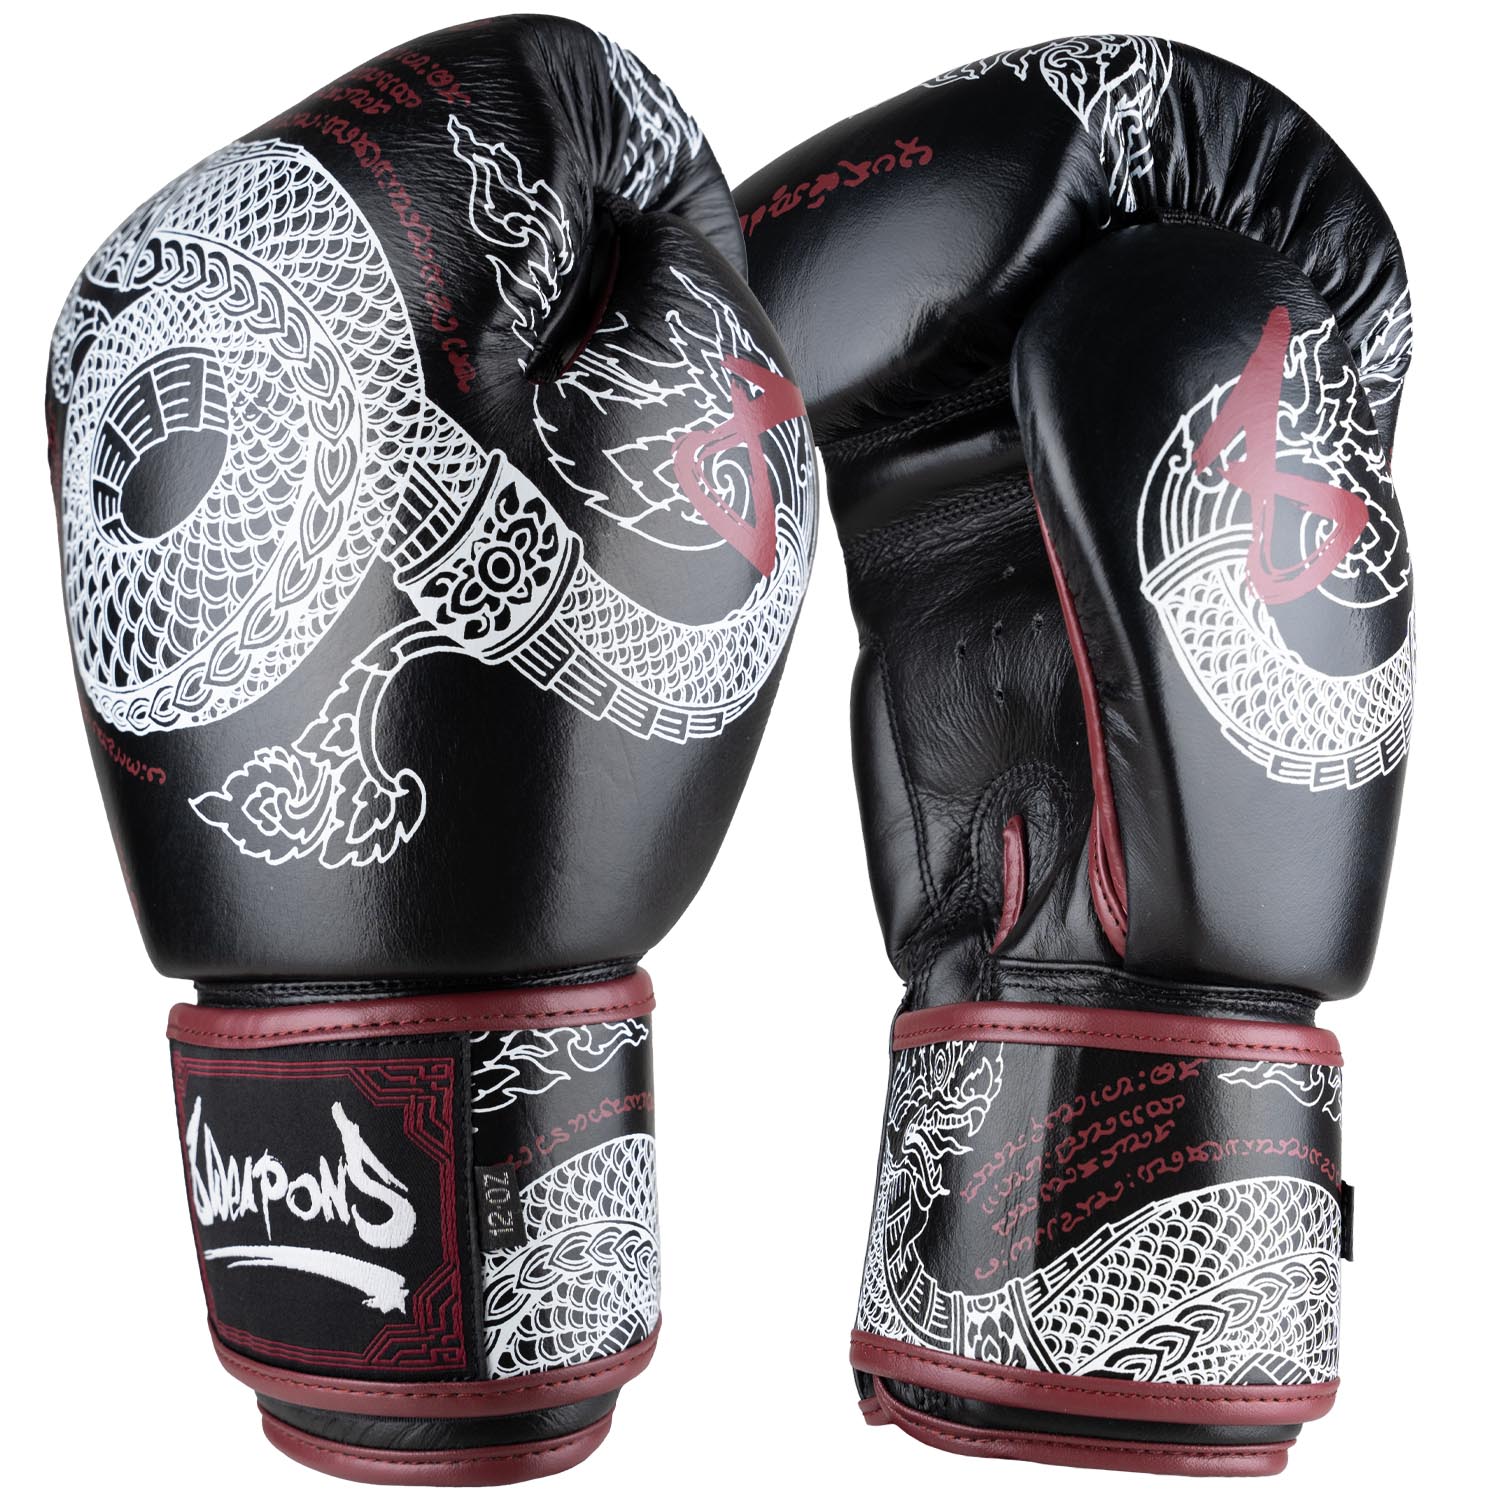 8 WEAPONS Boxing Gloves, Sak Yant Naga, black-maroon